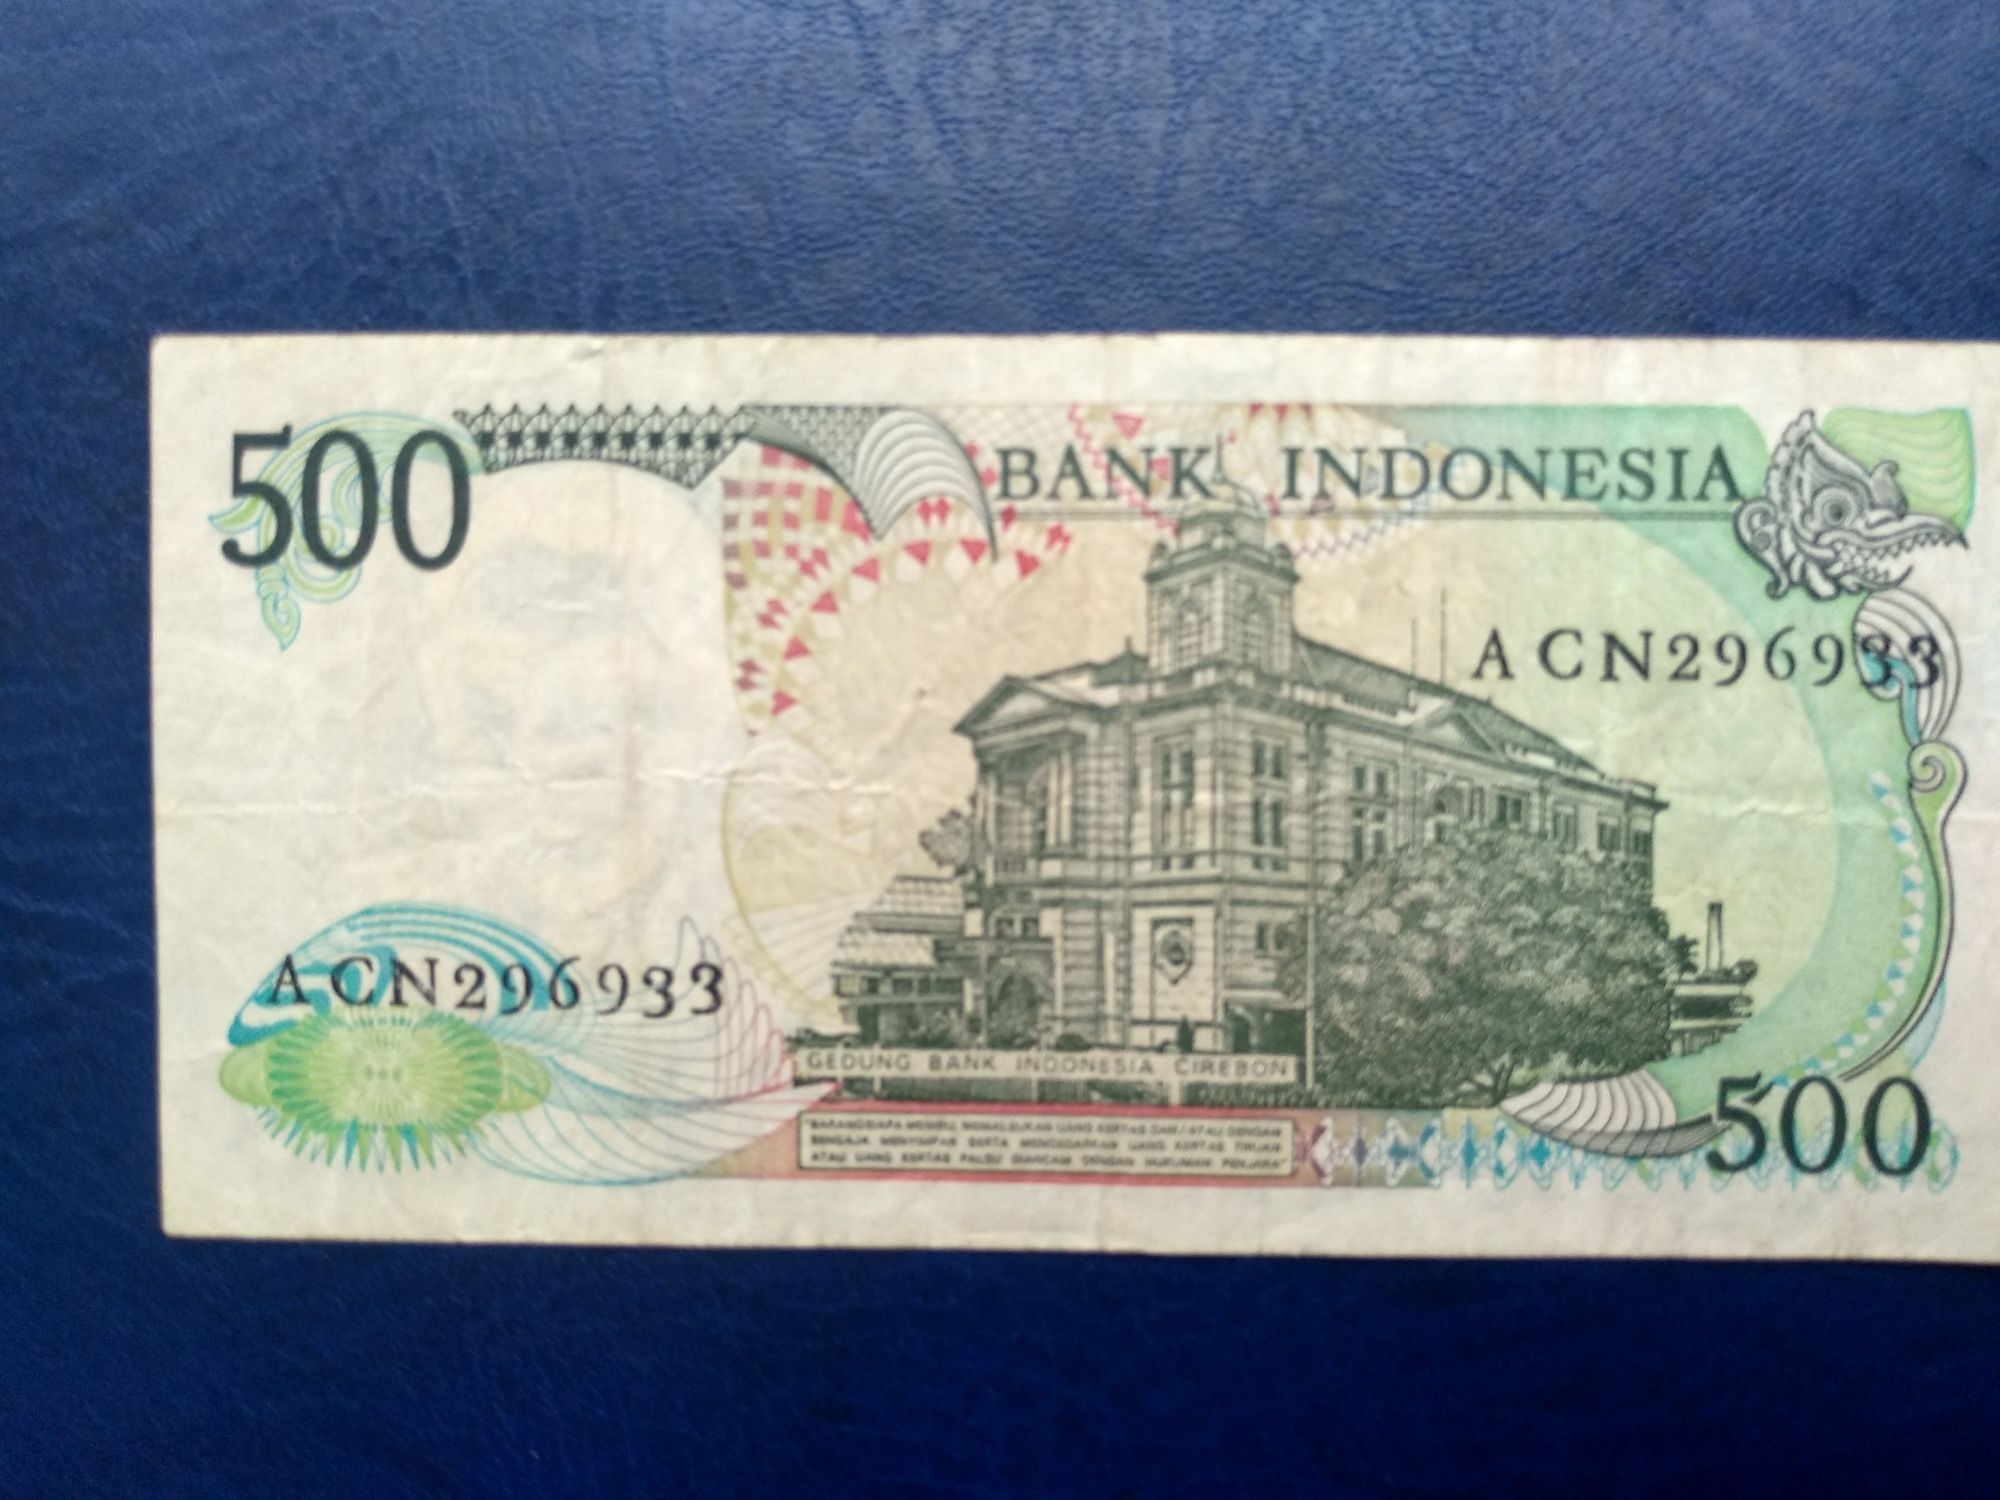 Indonezja - Banknot 500 Rupia z 1988 roku.